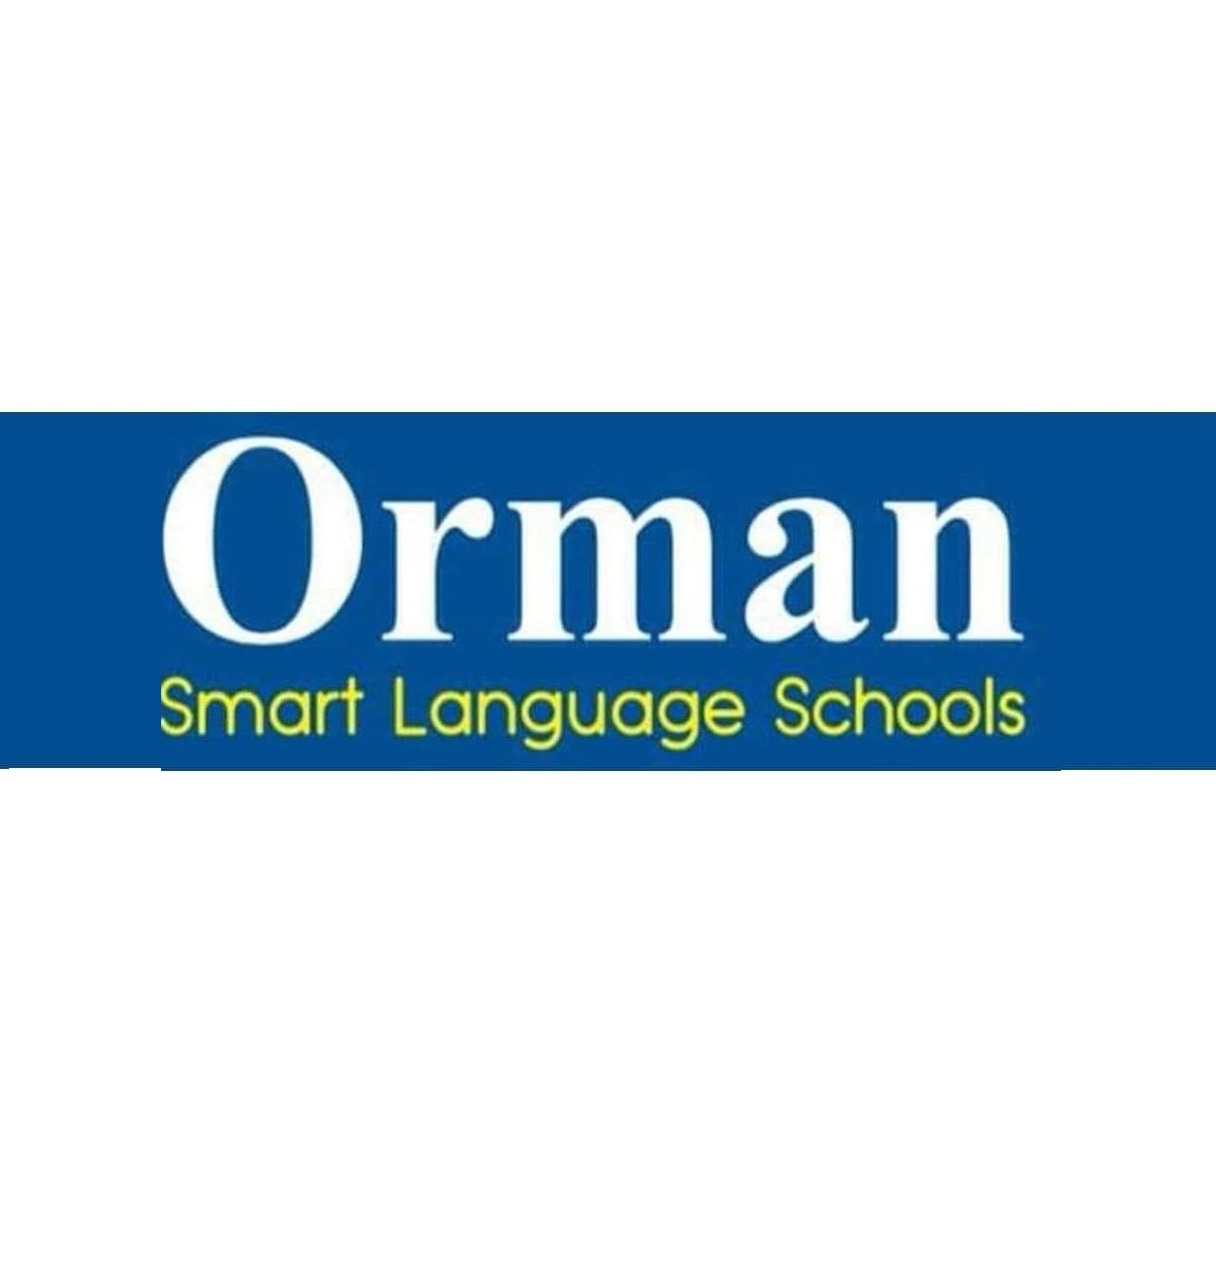 Orman Smart Language